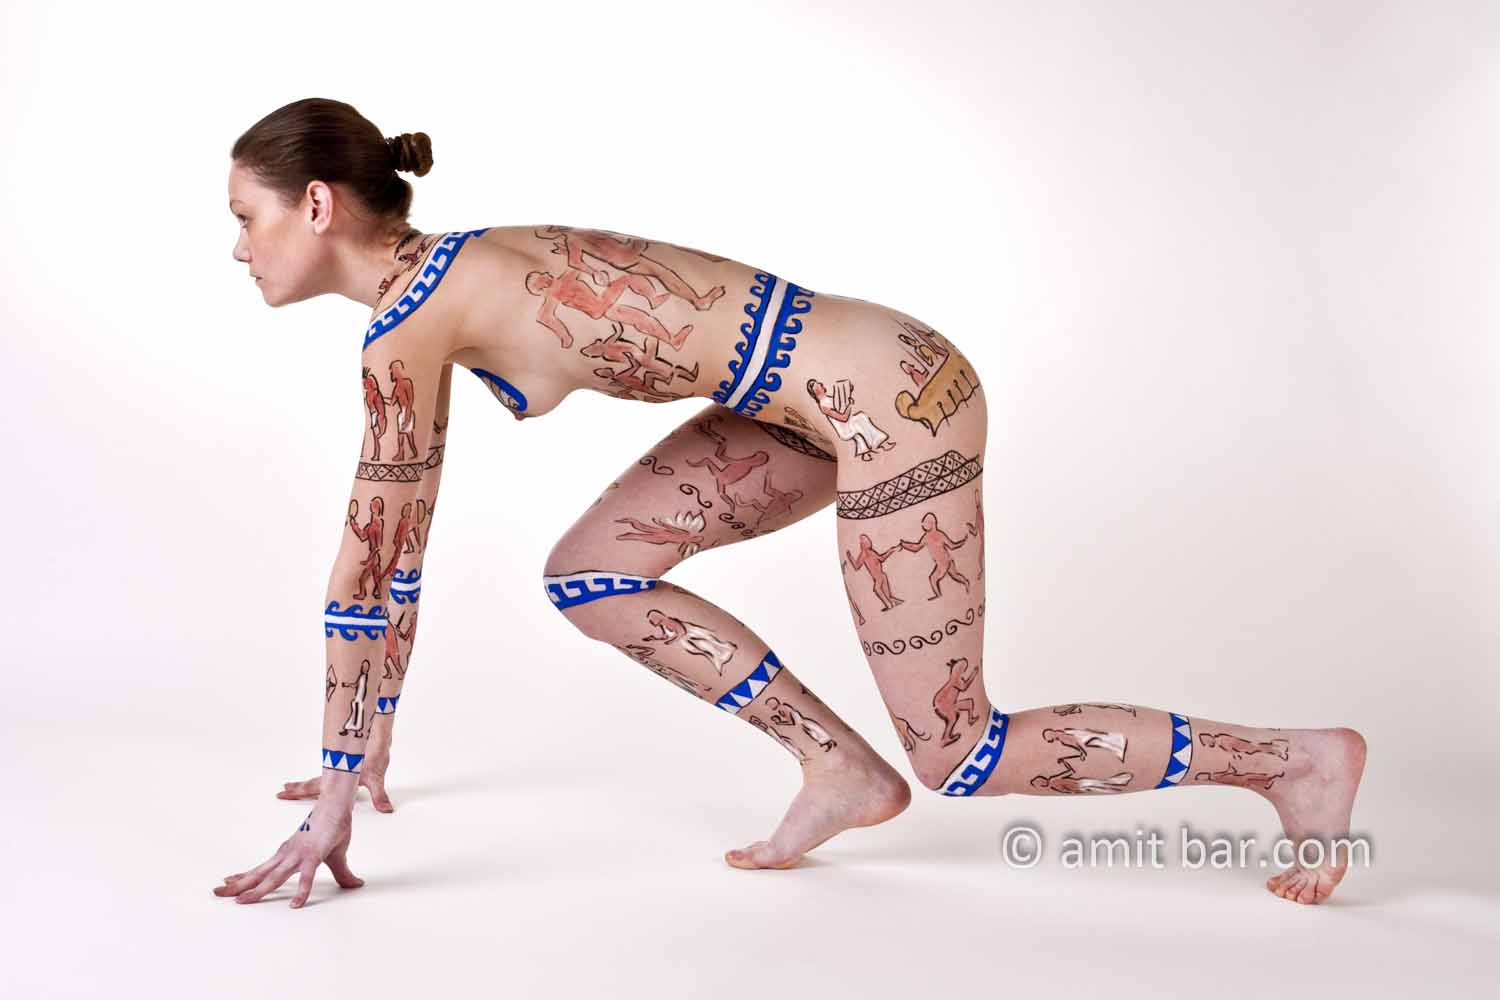 Greek athlete II: Body-painted model in Greek symbols